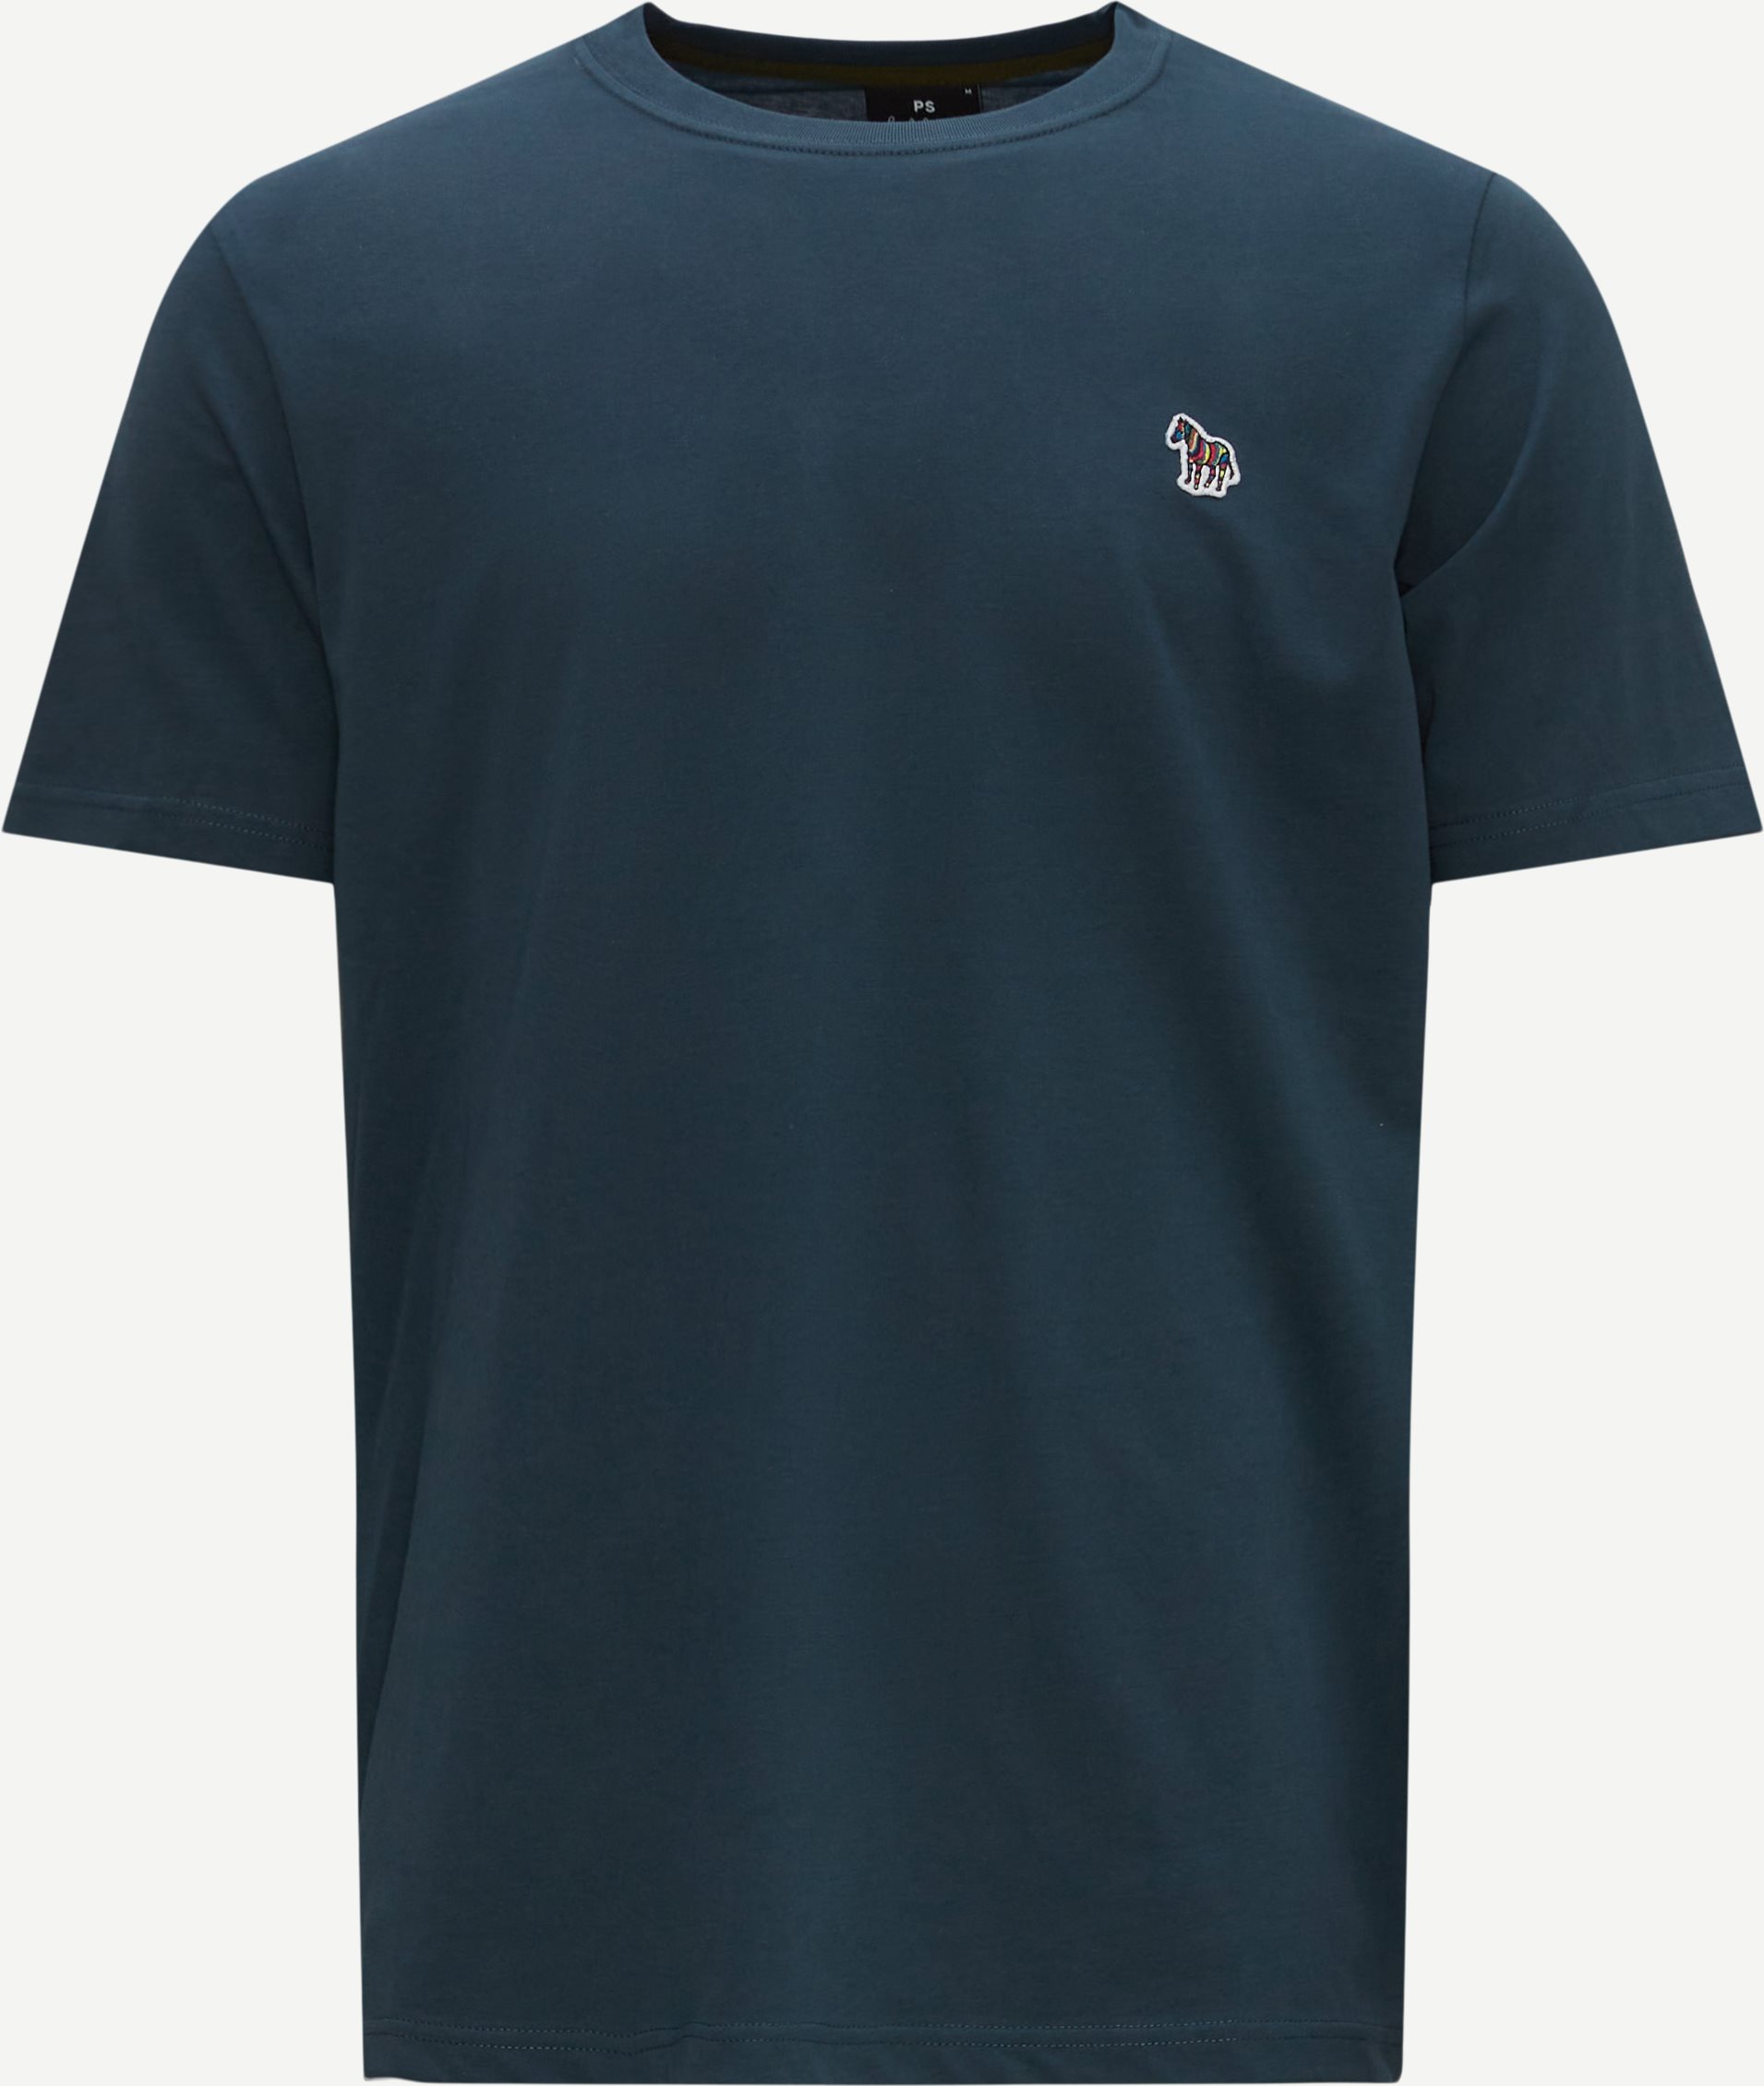 PS Paul Smith T-shirts 011RZ-K20064 ZEBRA BADGE Blå